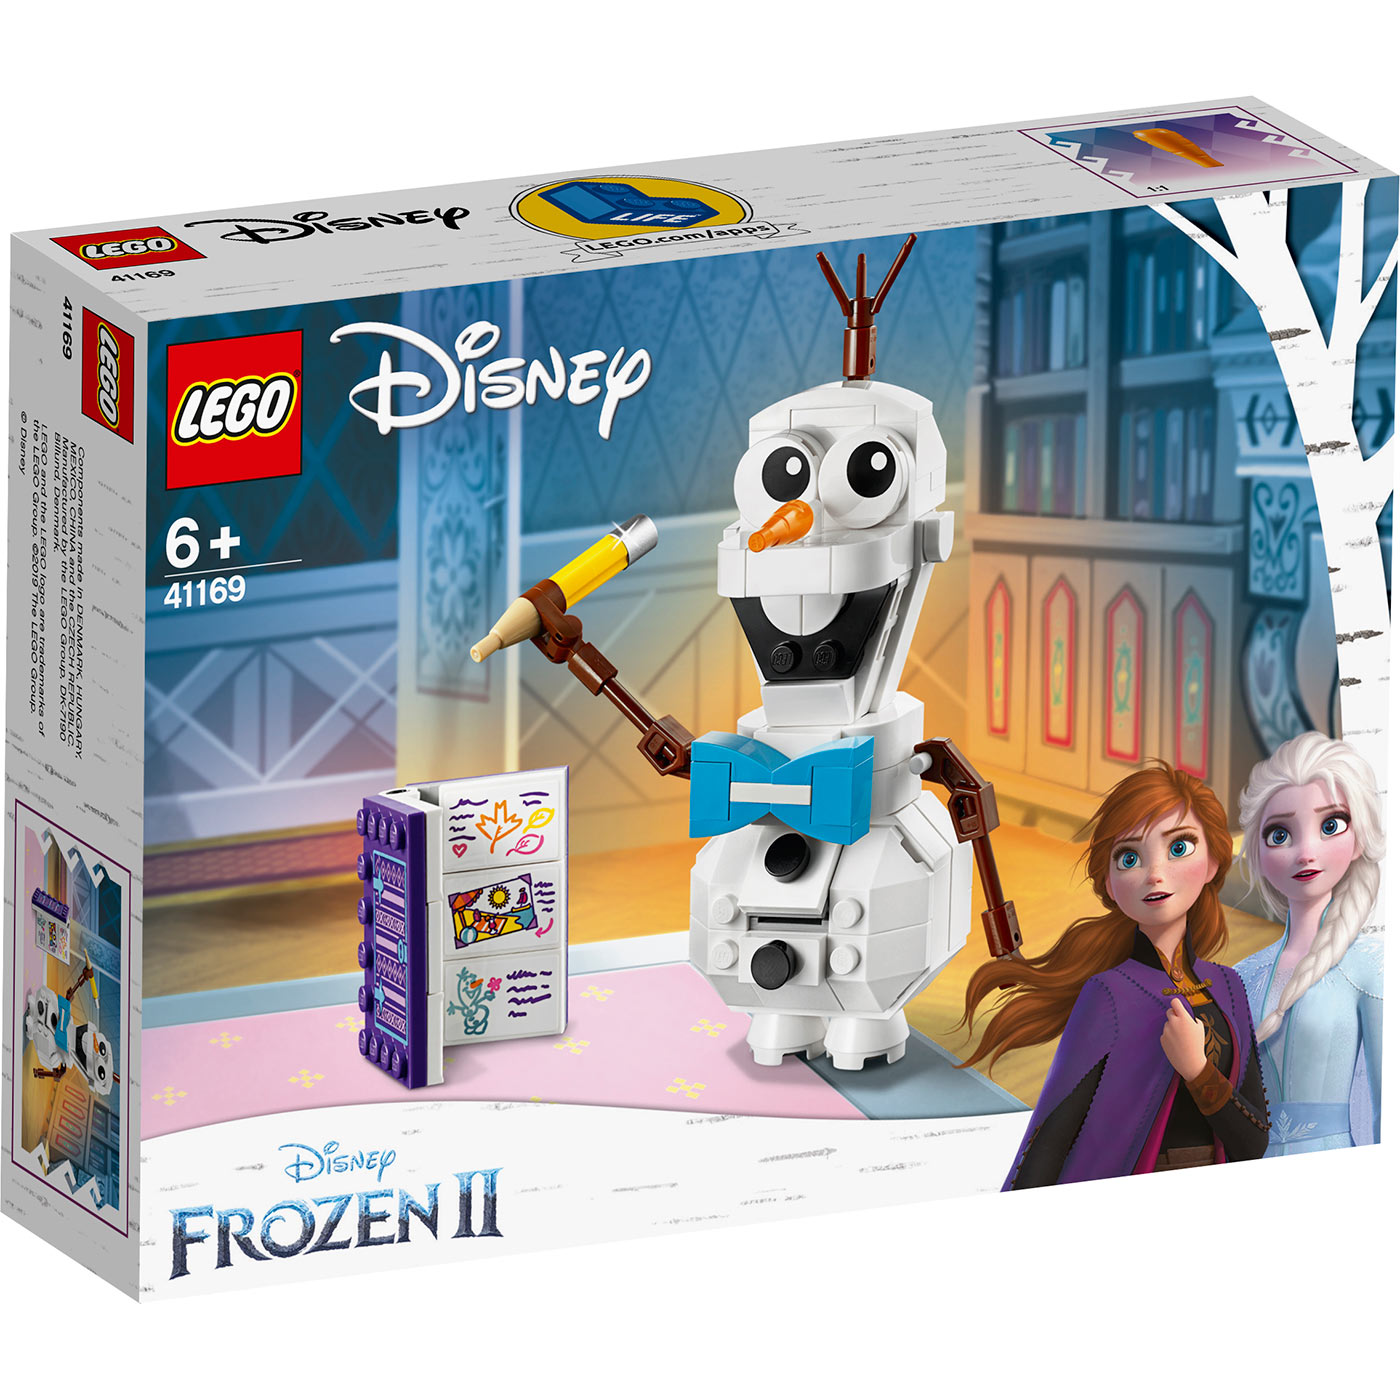 LEGO Disney Frozen 2 Sets Officially Revealed at Frozen Fan Fest The